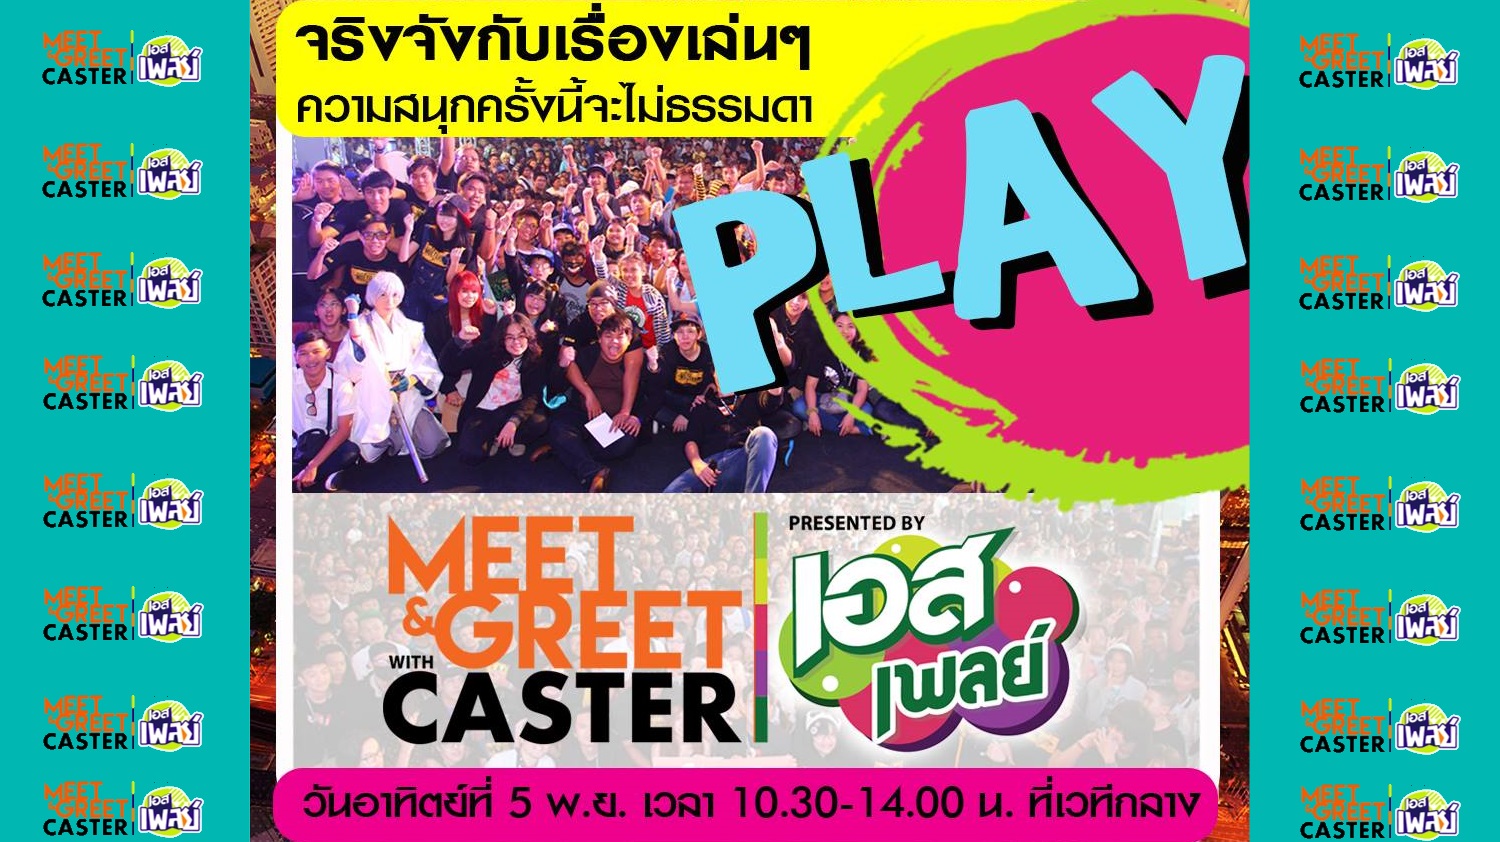 “MEET & GREET with CASTER” ใกล้ชิด “แคสเตอร์” อันดับต้น ๆ ของไทยในงาน TGSBIG 2017